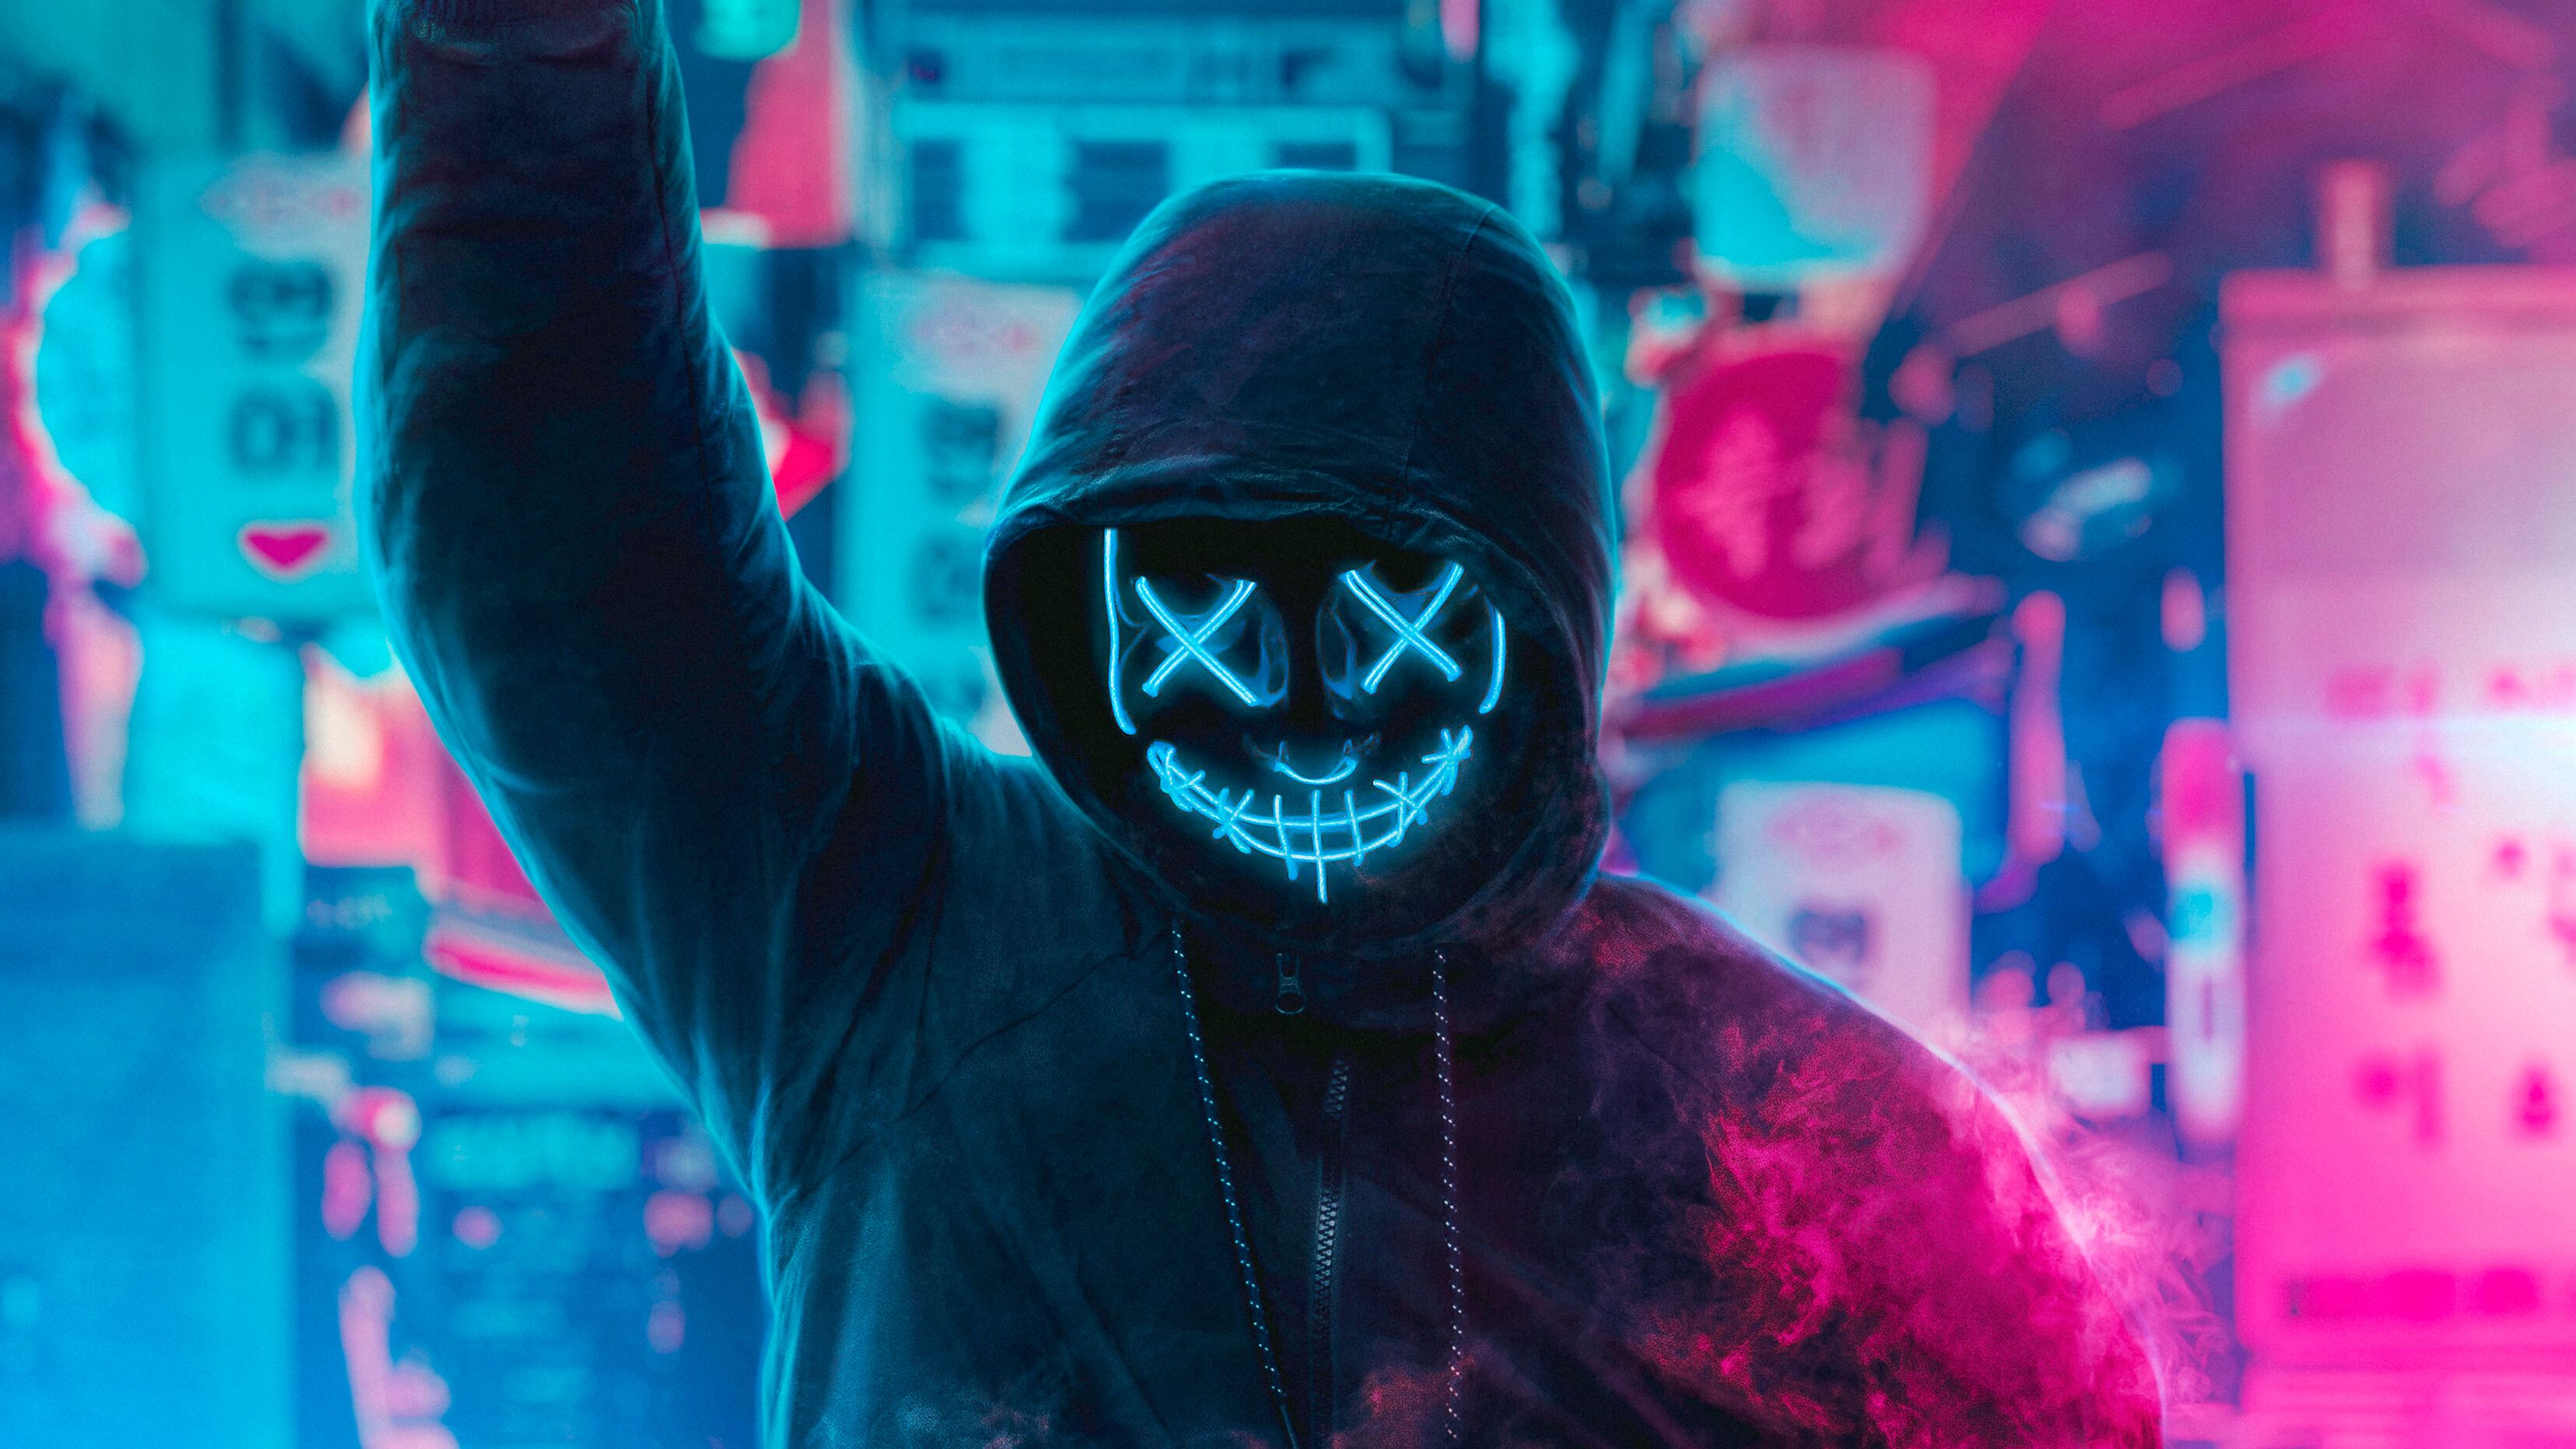 Mask Guy Neon Eye Wallpaper and Background Image